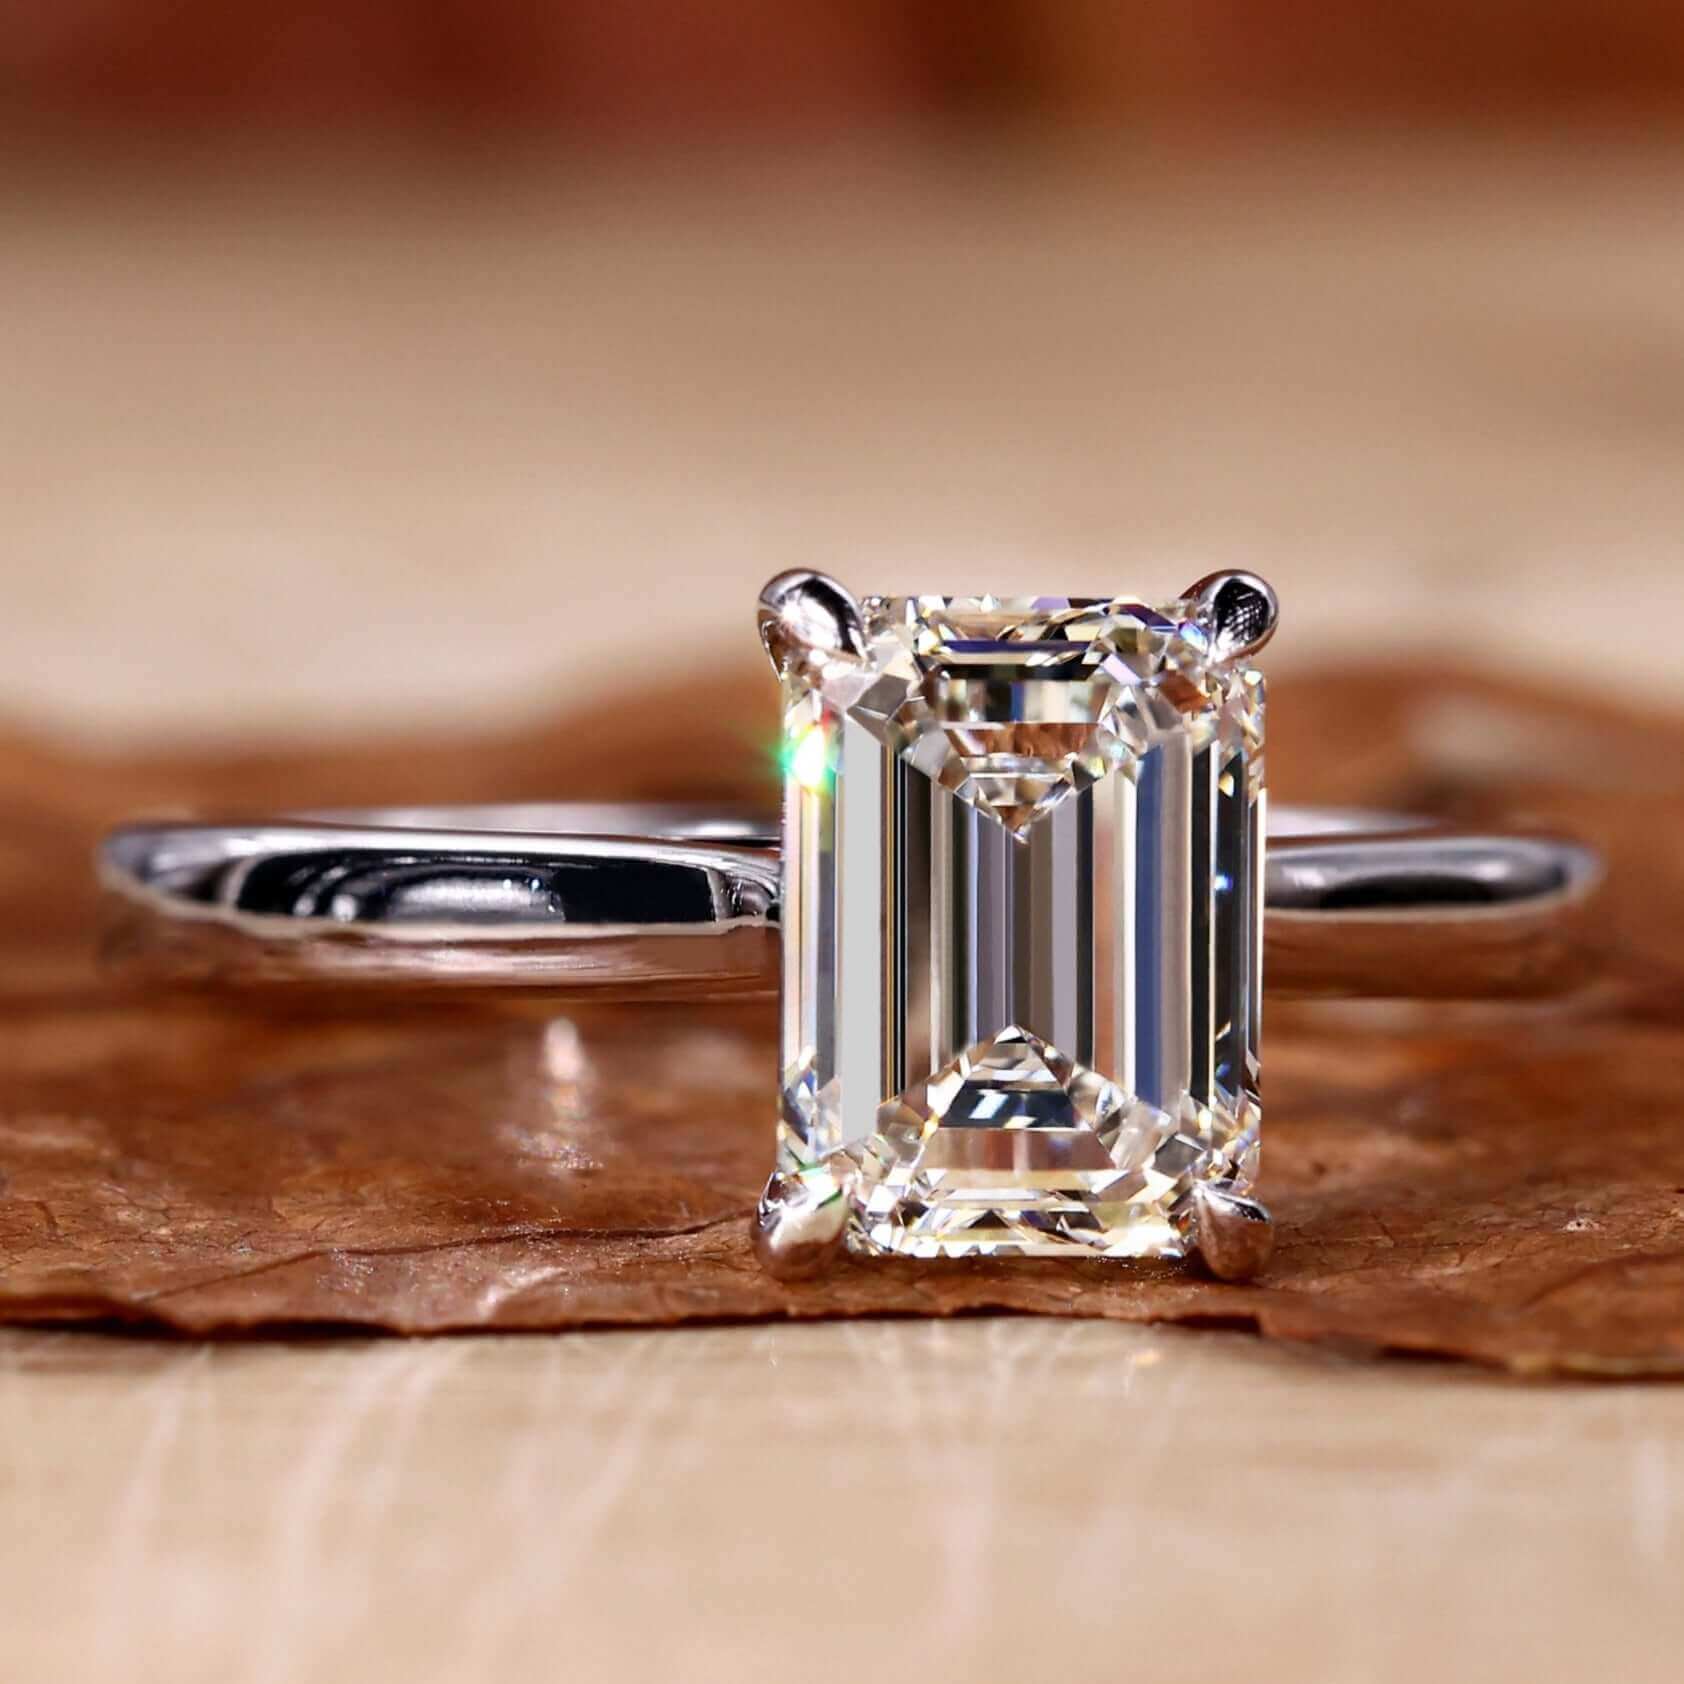 2 Carat Solitaire Emerald Cut Diamond Ring for Women